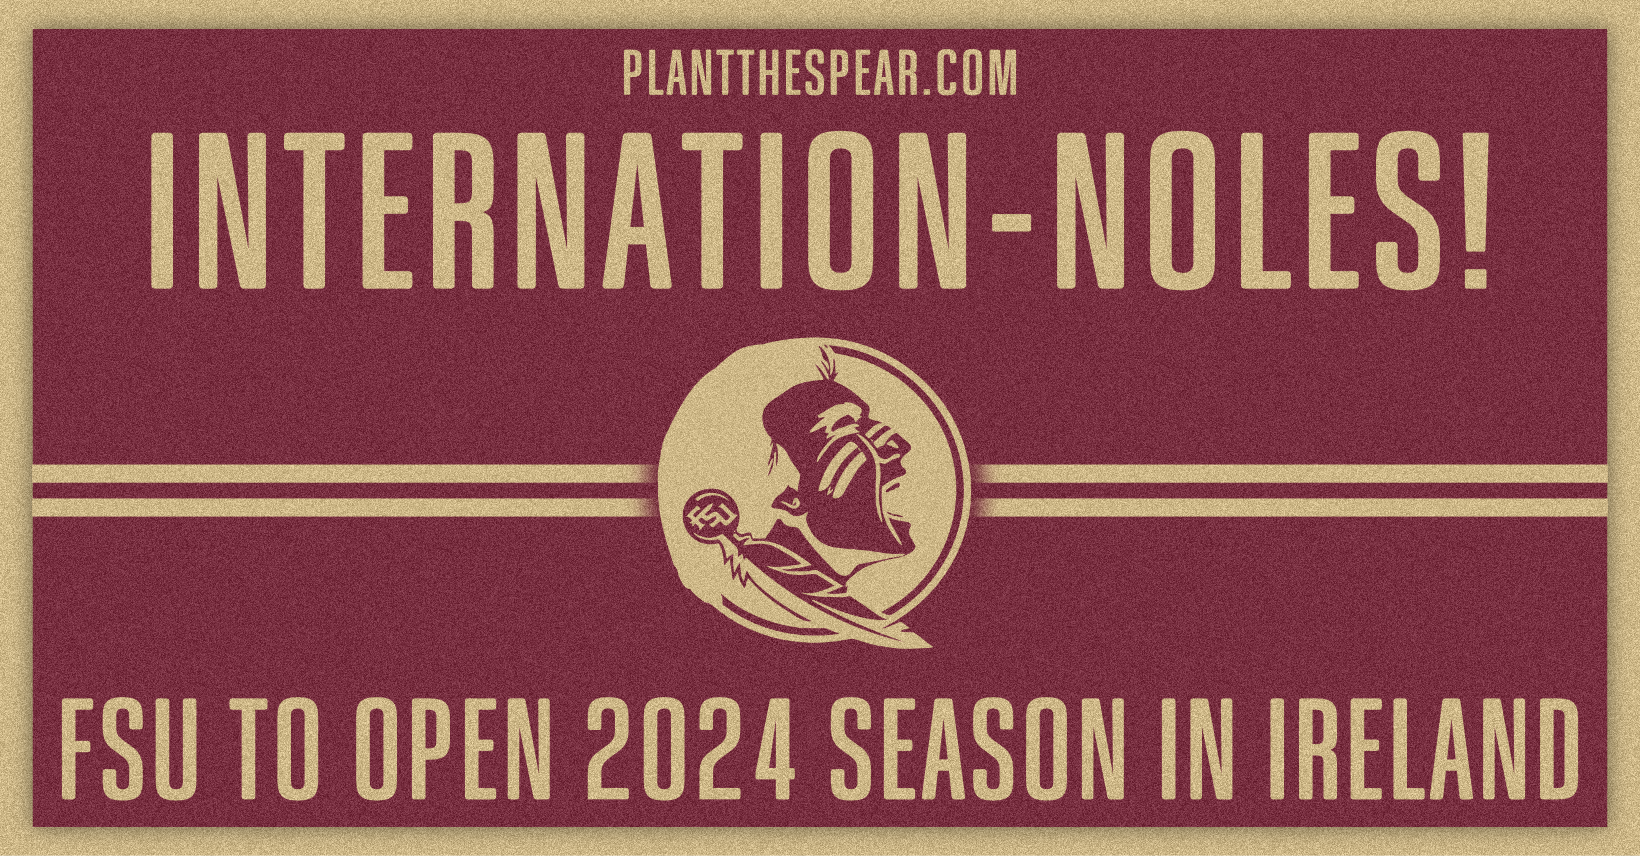 InternationNoles! FSU to open the 2024 season in Ireland. » Plant The